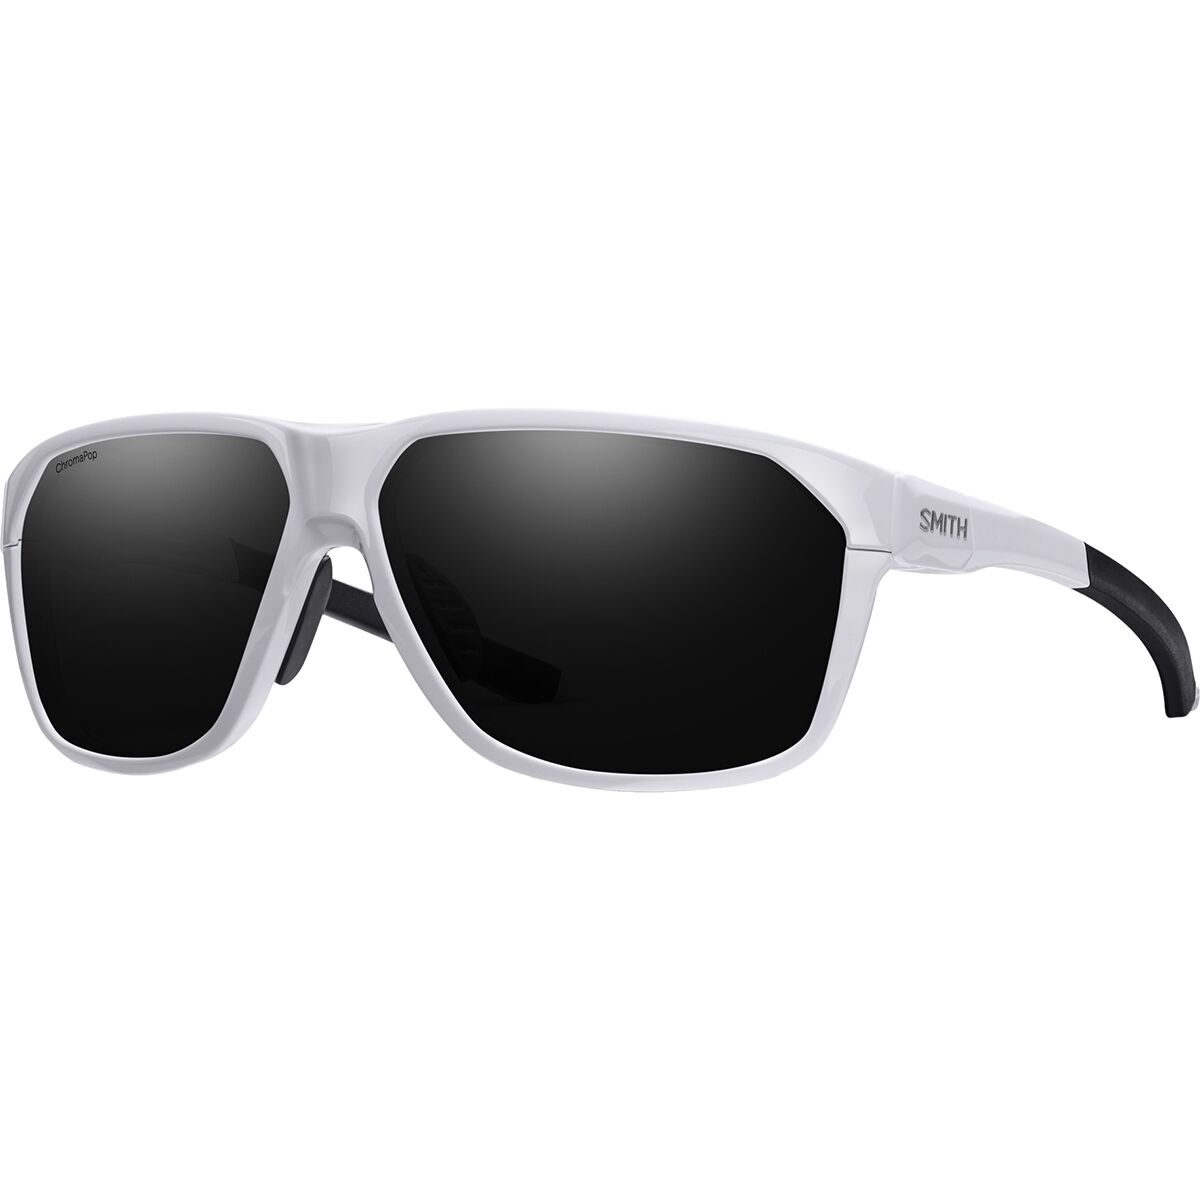 Smith Leadout Pivlock Polarized Sunglasses - Men's